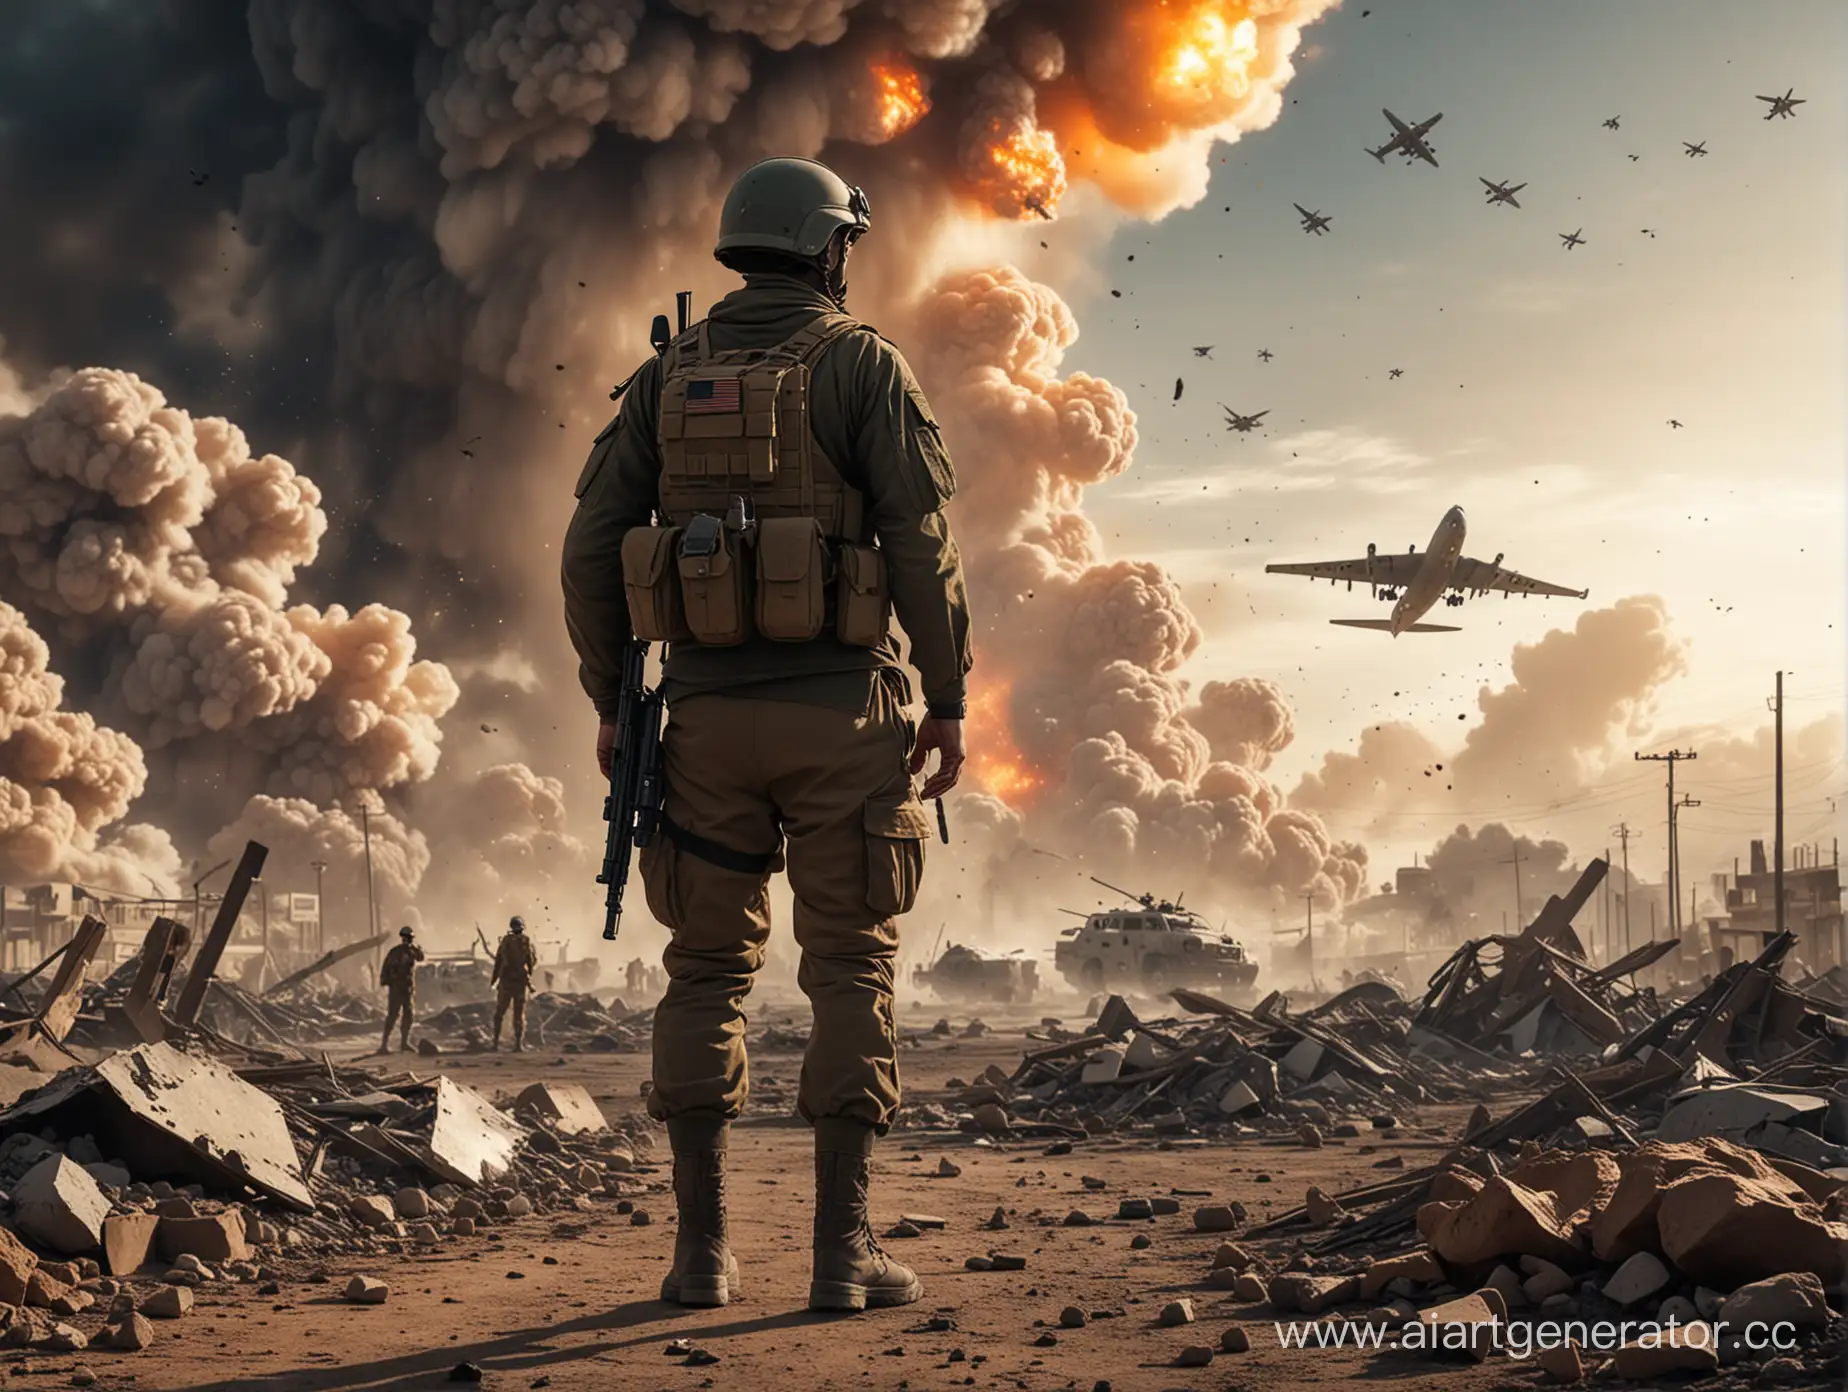 Valiant-Soldier-Shielding-Civilians-Amidst-Warzone-Chaos